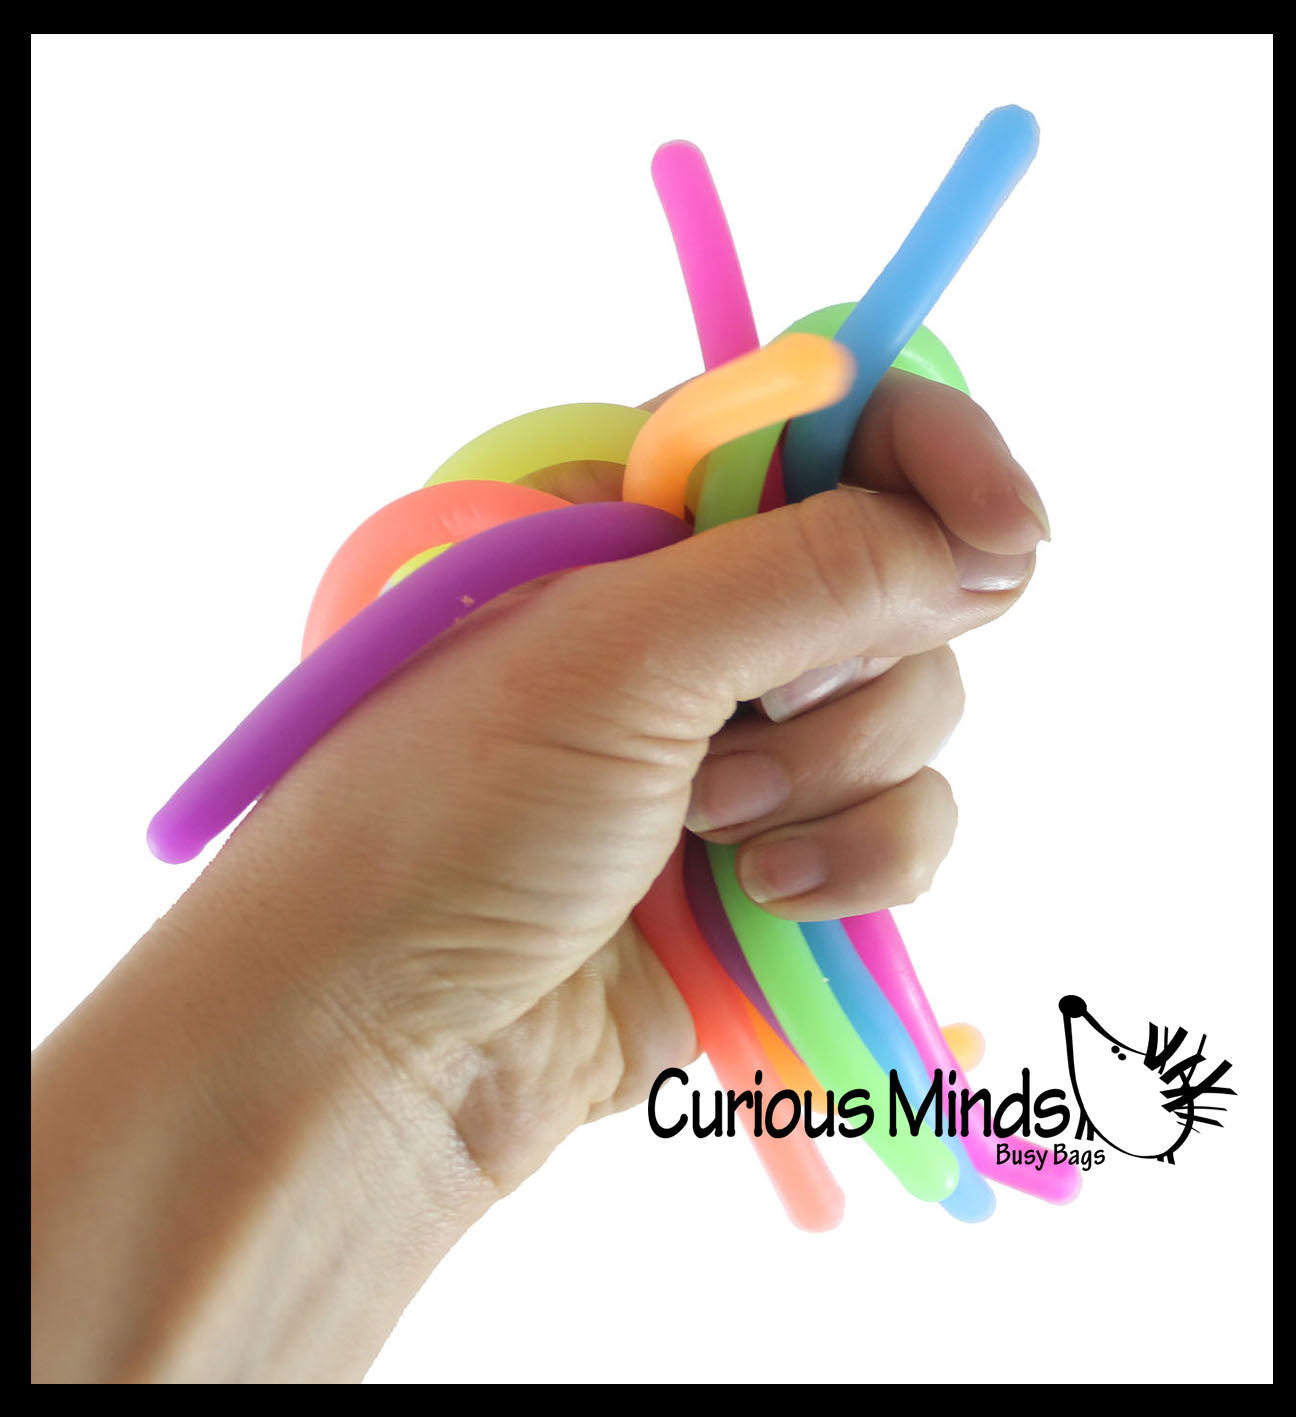 Wiggly Worm Stretchy String Fidget Toy - 20 - Pieces